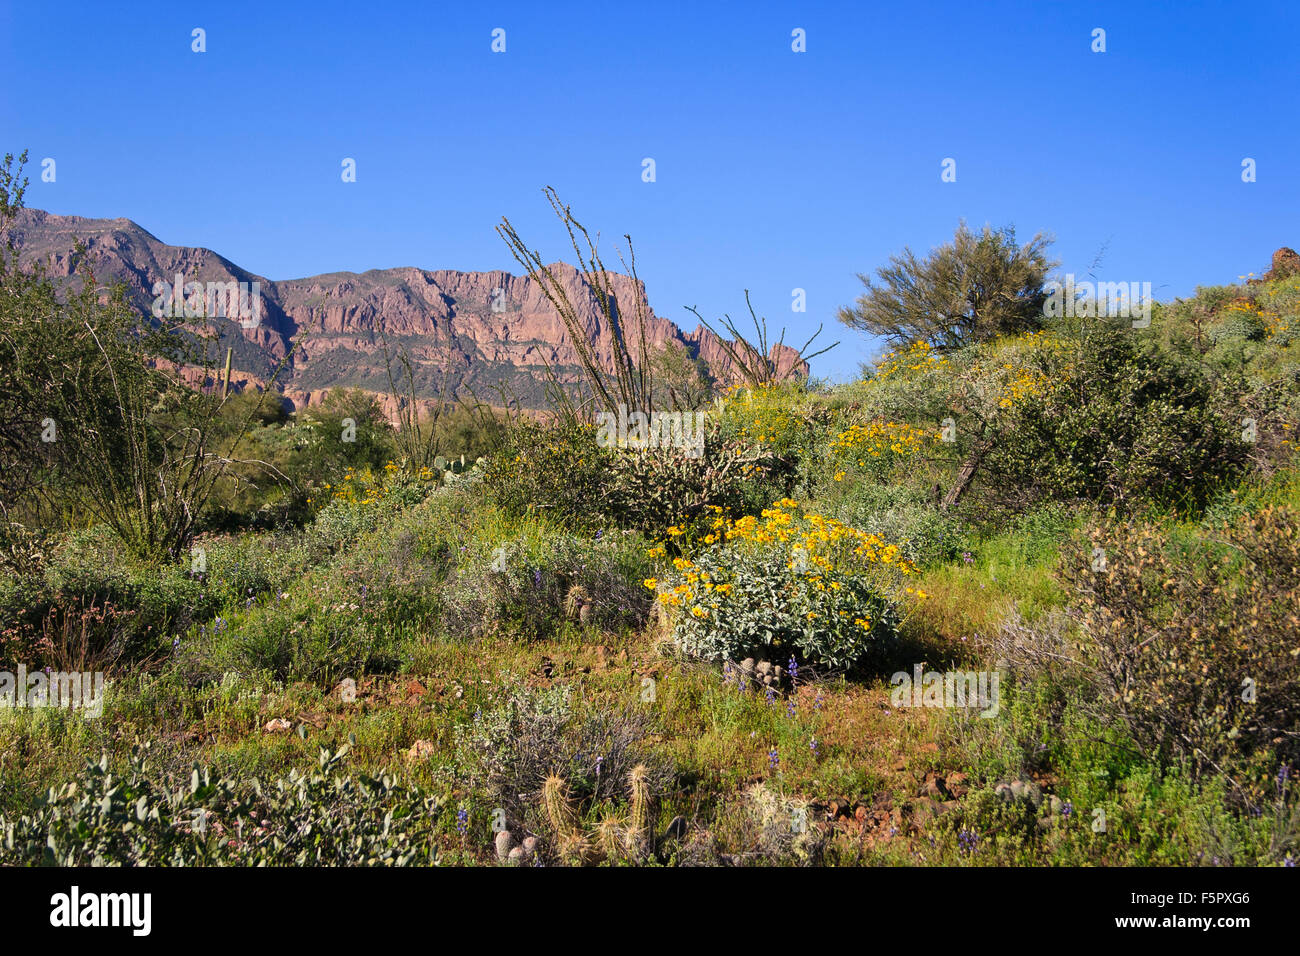 Great assortment of Sonoran deset cactus appear in this desert scene. Stock Photo